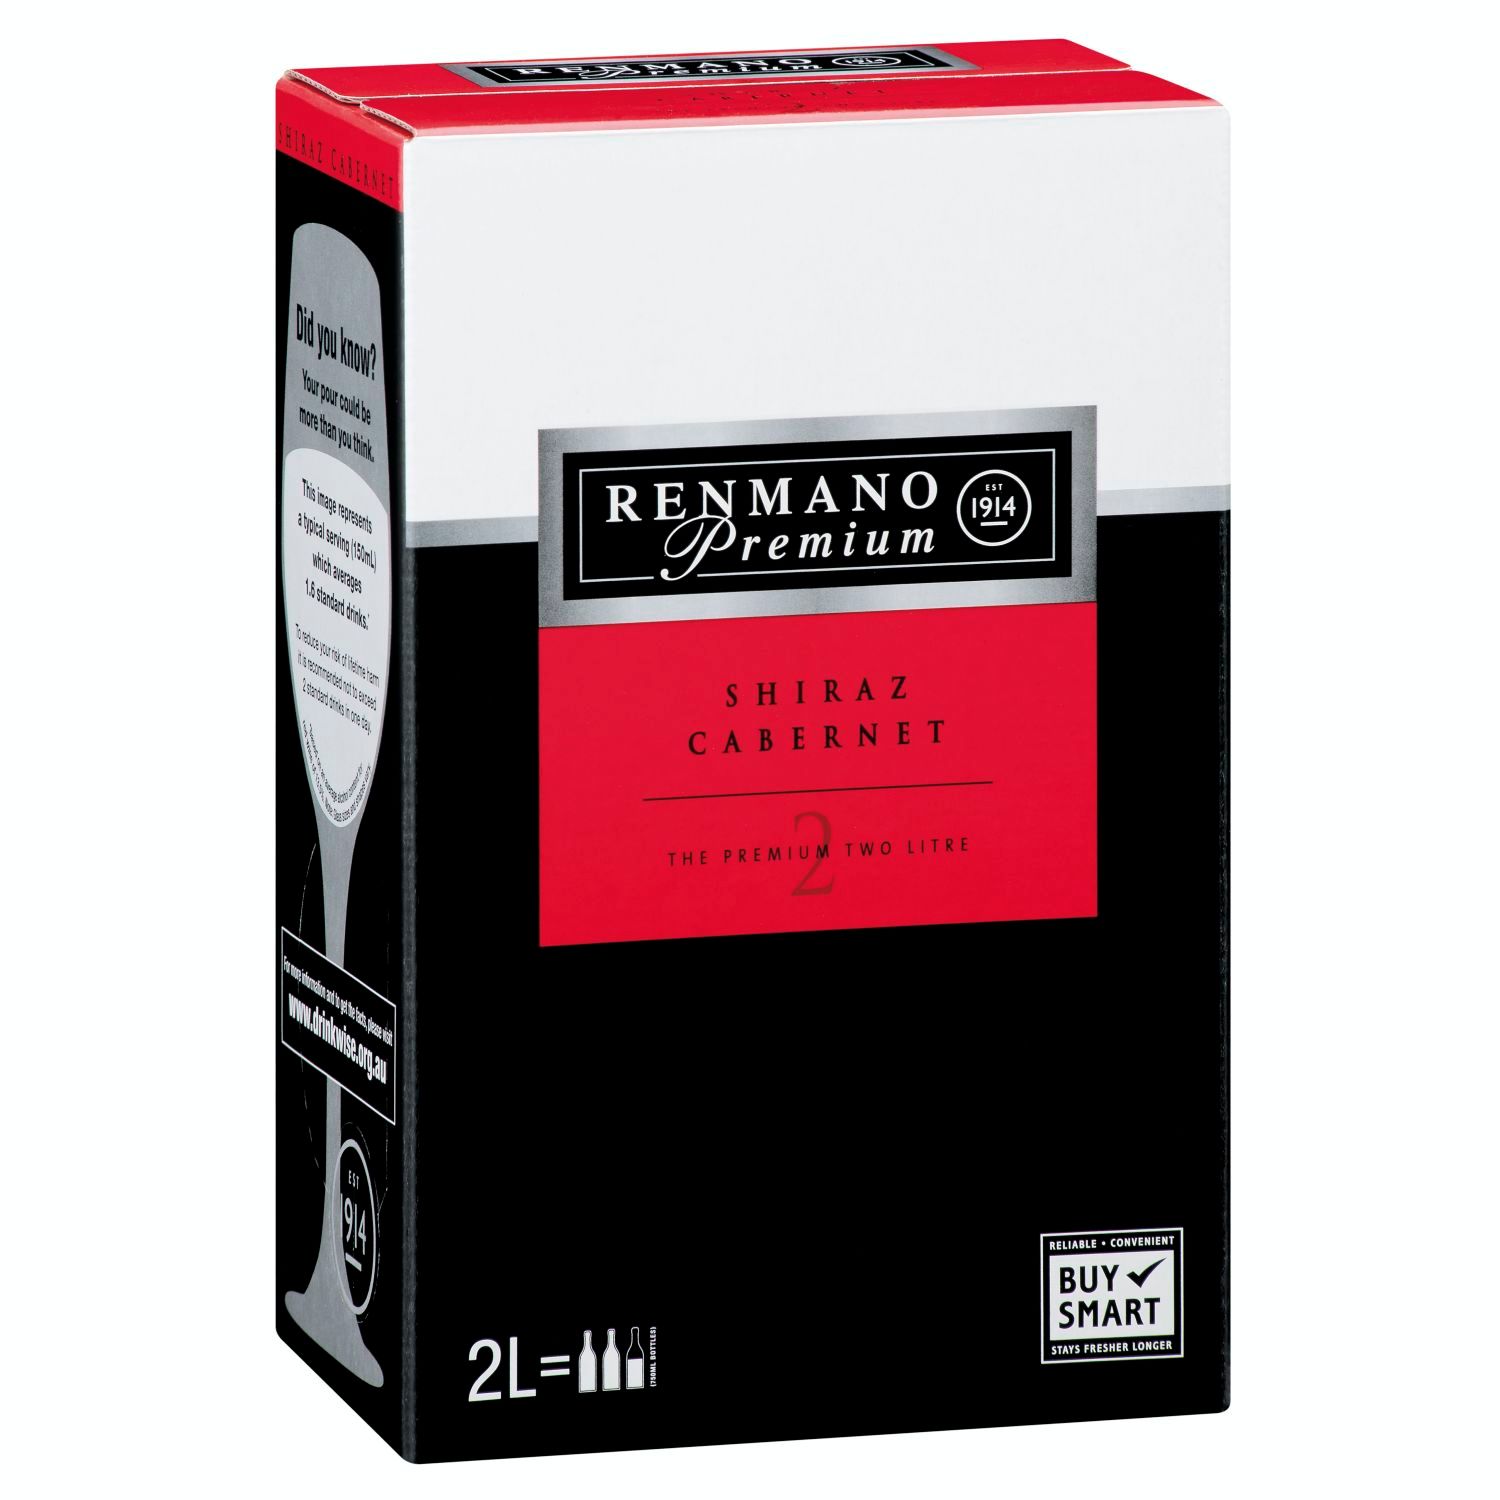 Renmano Premium Shiraz Cabernet Cask 2L